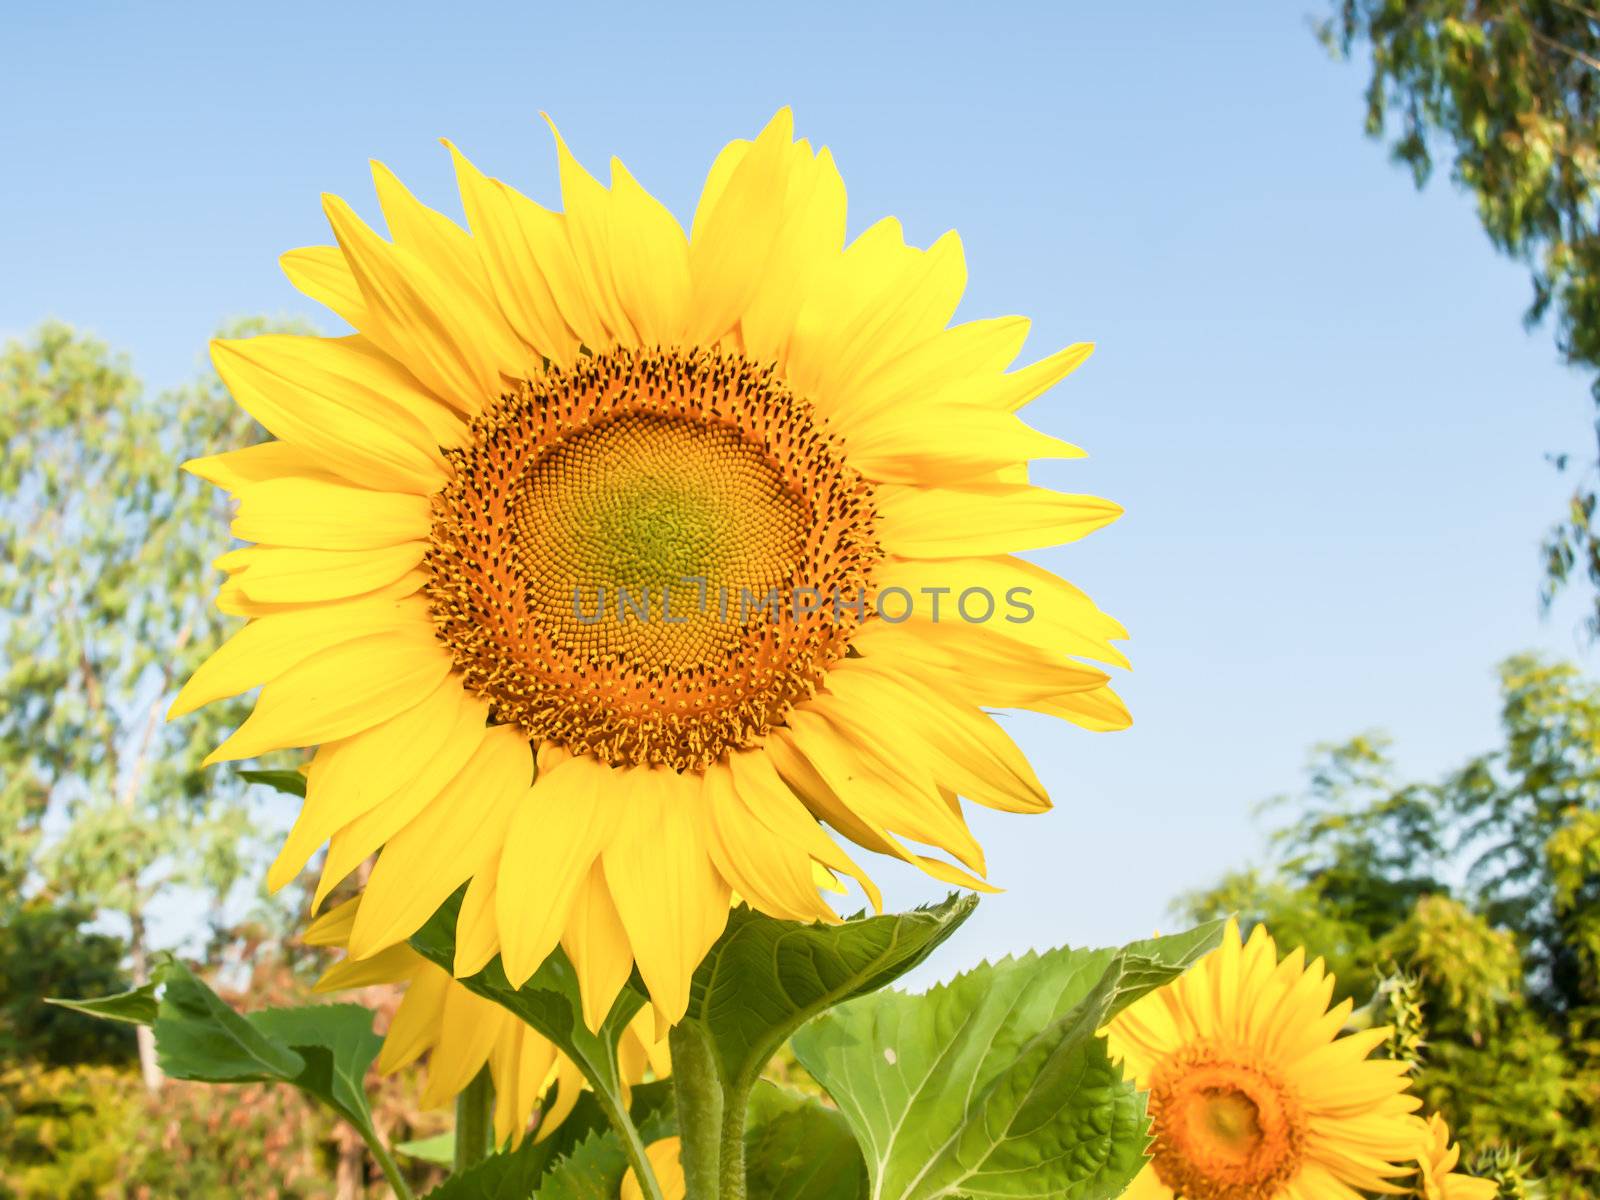 A field of sunflowers by wmitrmatr